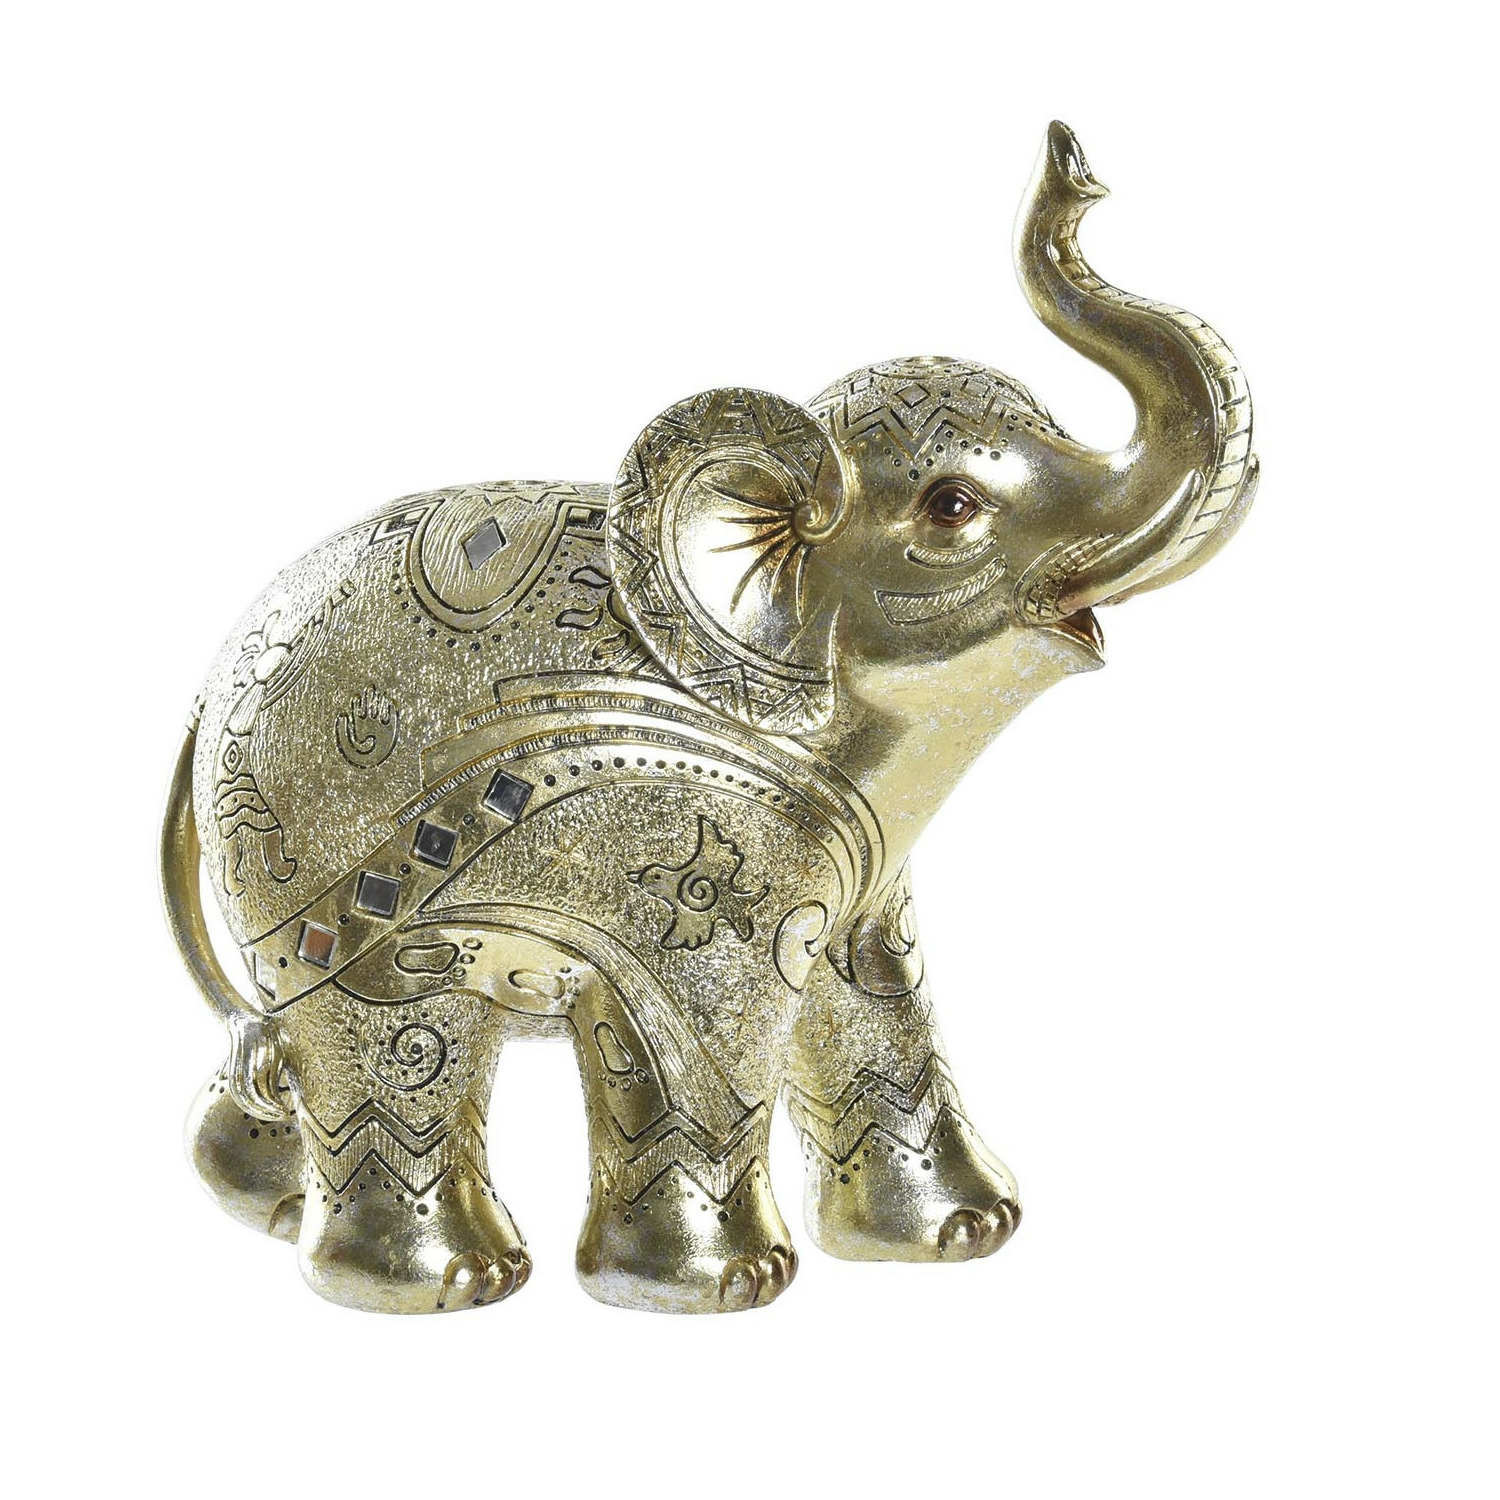 Items Olifant dierenbeeld goud polyresin 24 x 10 x 24 cm home decoratie